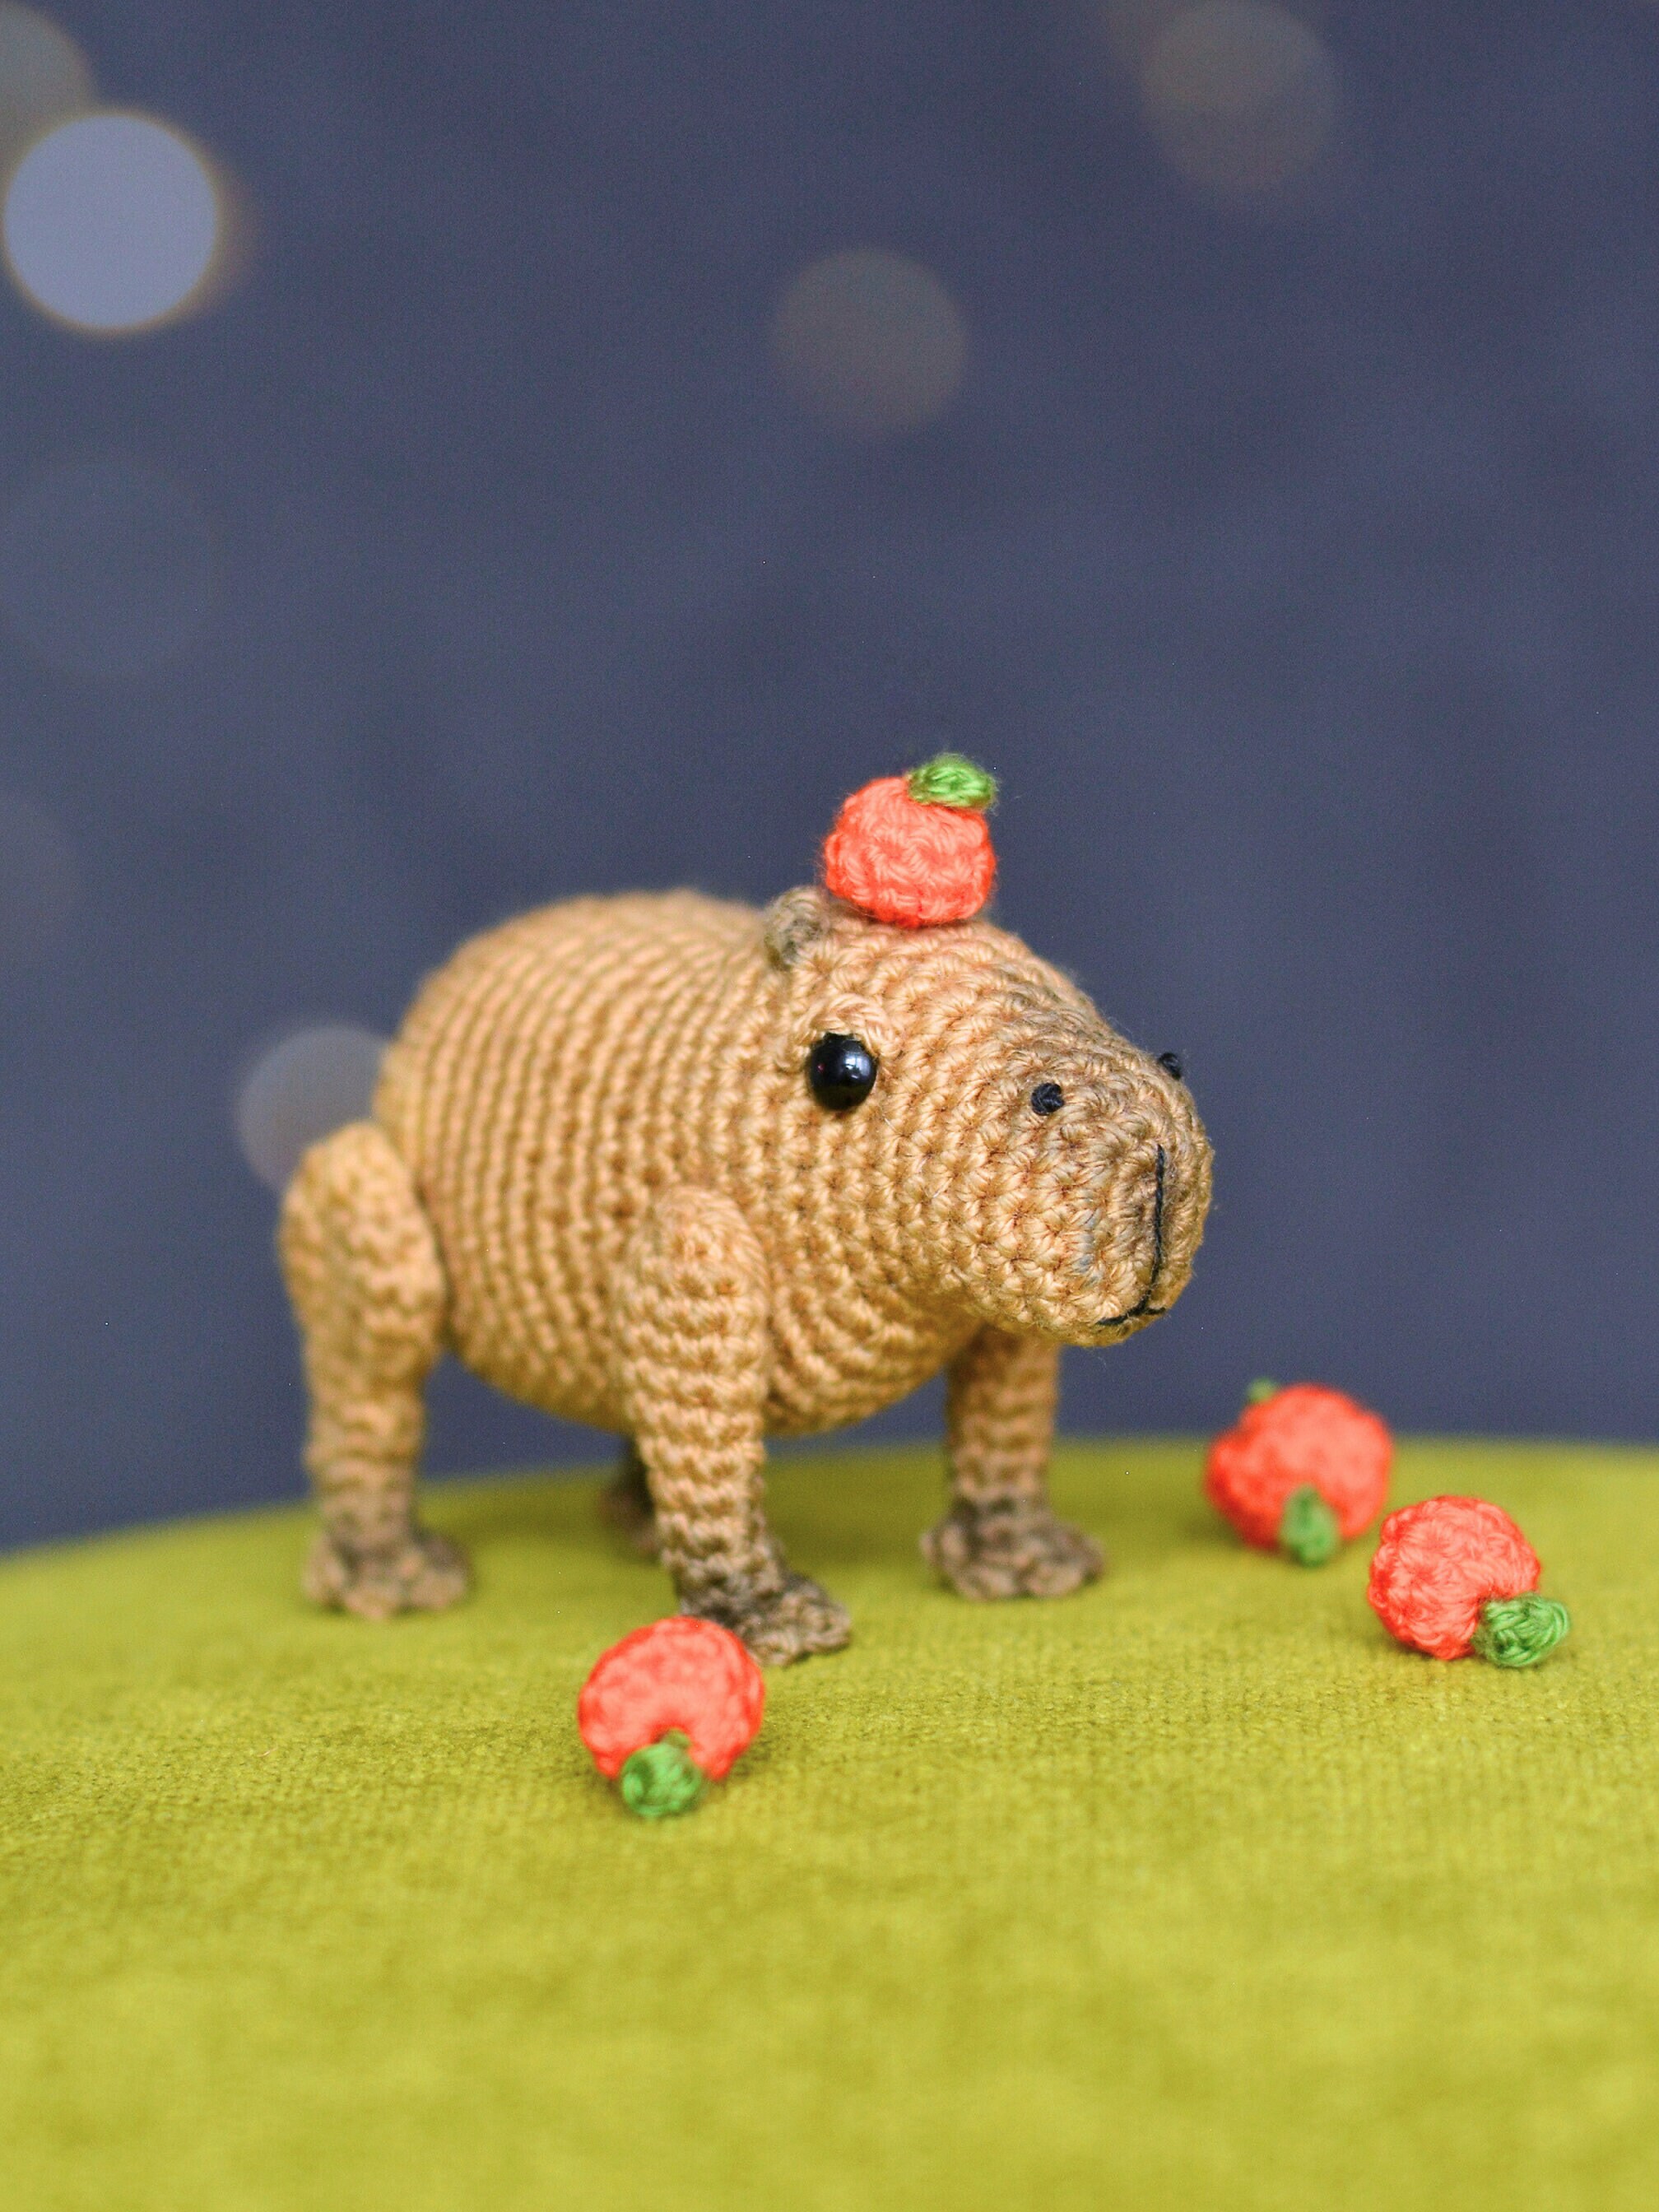  YAMAXIN 3PCS Animal Crochet kit for Beginners, Capybara Giraffe  Koala Crochet Starter Kits DIY Craft Gift for Complete Adult and Kid  Crochet Stuffed Kit with Step-by-Step Video Tutori